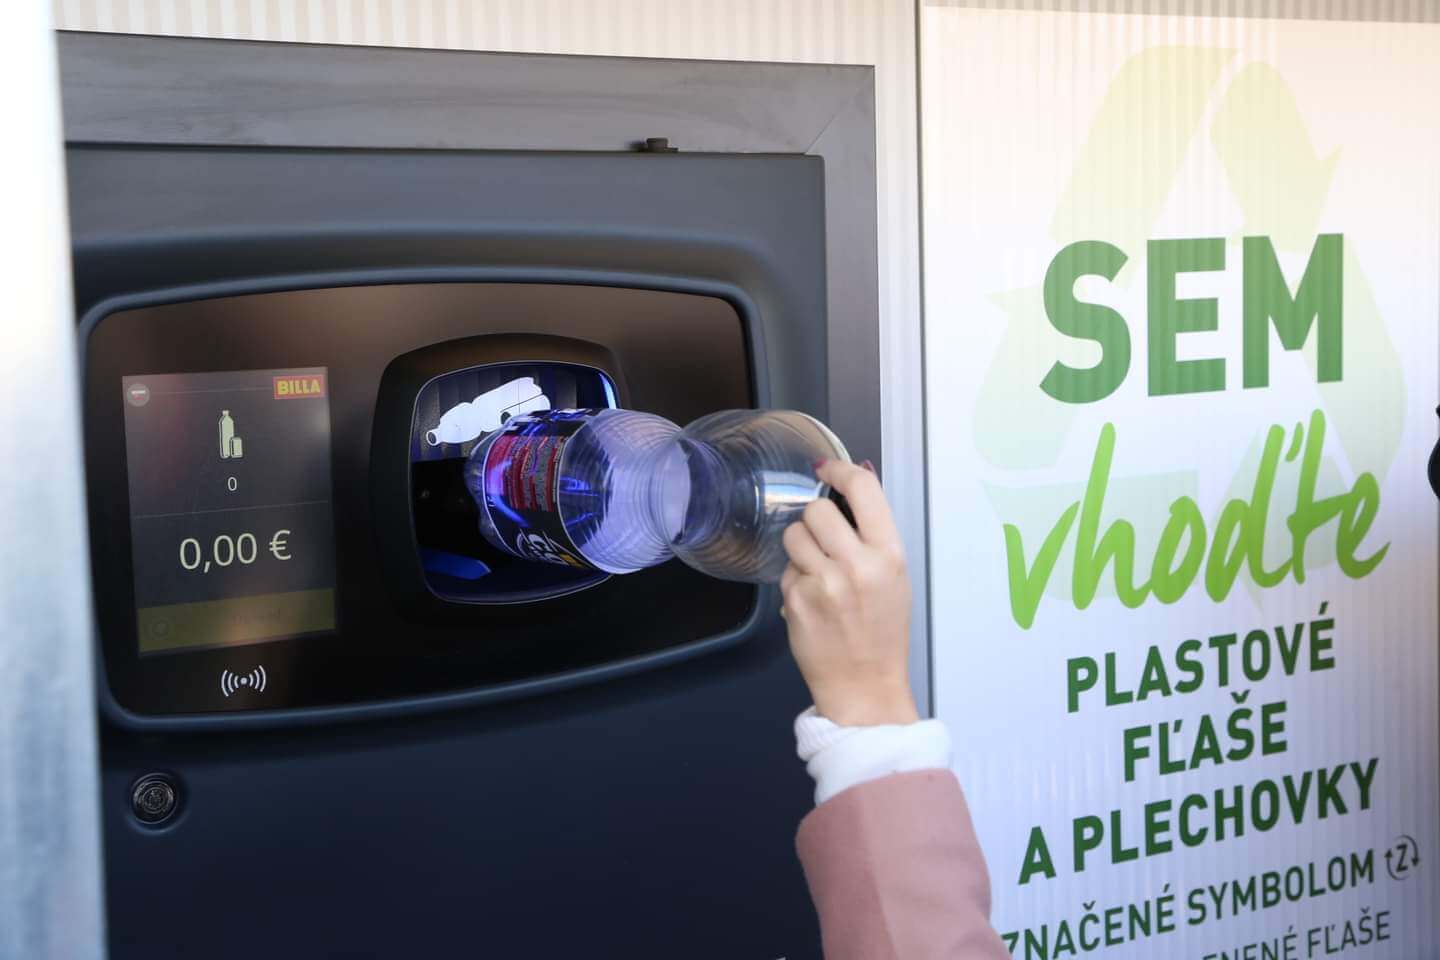 Slovensko zálohuje – Zálohový systém na plastové fľaše a plechovky bol úspešne spustený